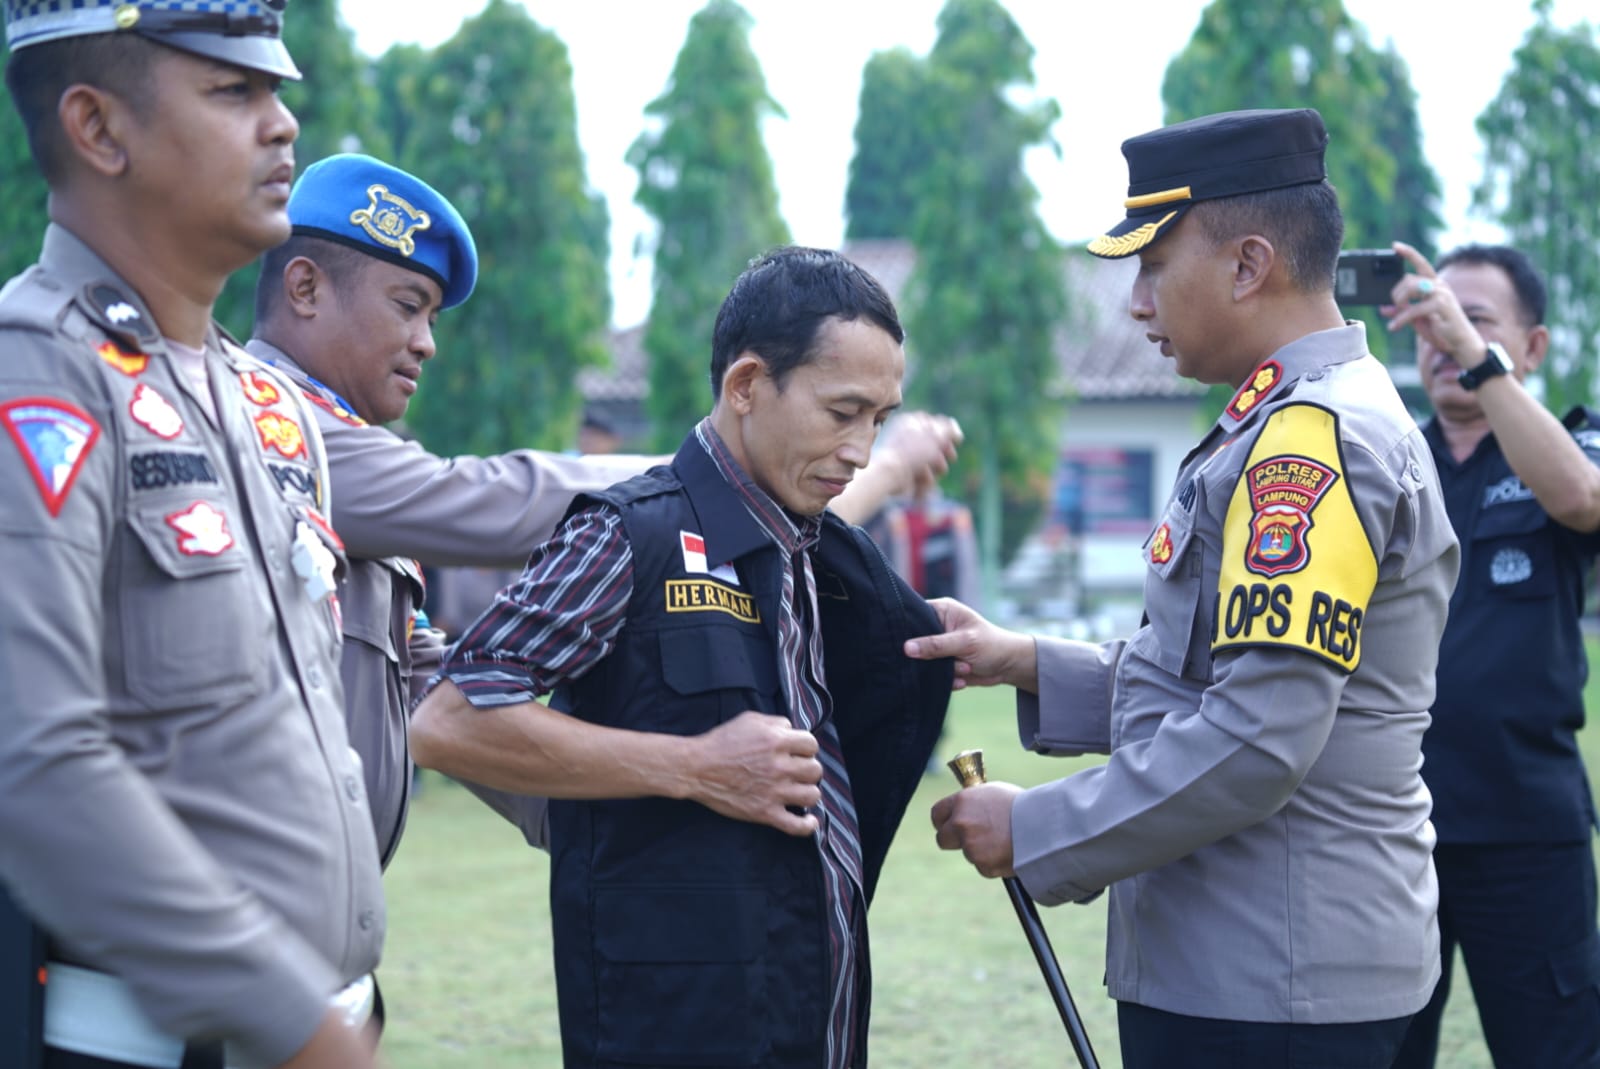 Kapolres Lampung Utara Pimpin Apel Bersama Polisi RW dan Mitra Polisi RW